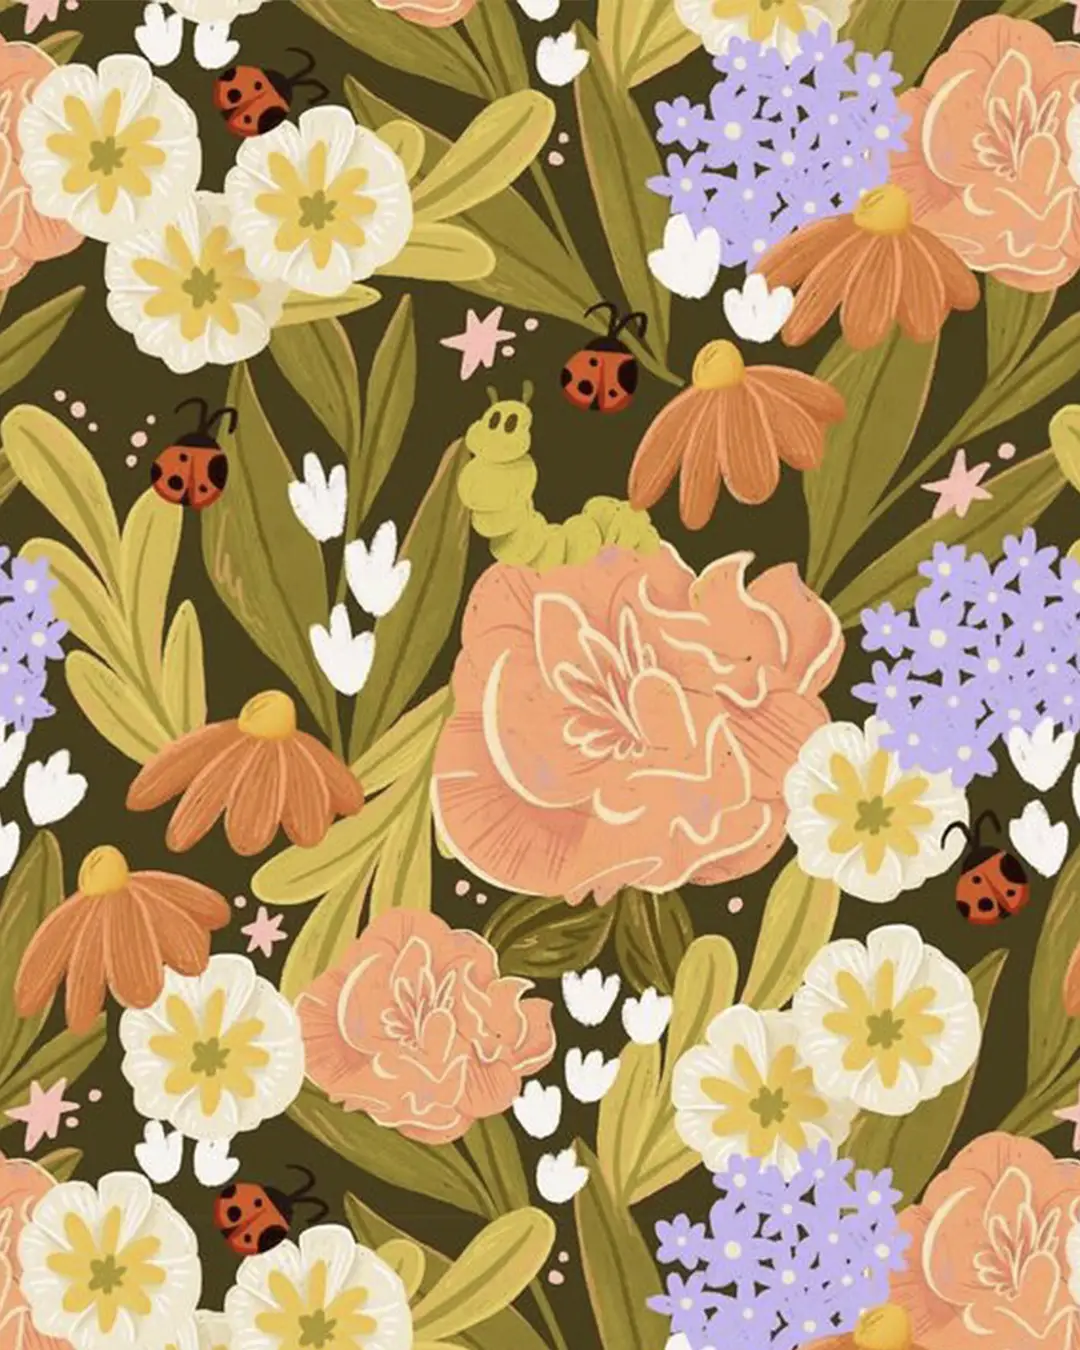 Sweet Spring Instagram Art Challenge - Brilliant Blossoms - wallflowerstudioco